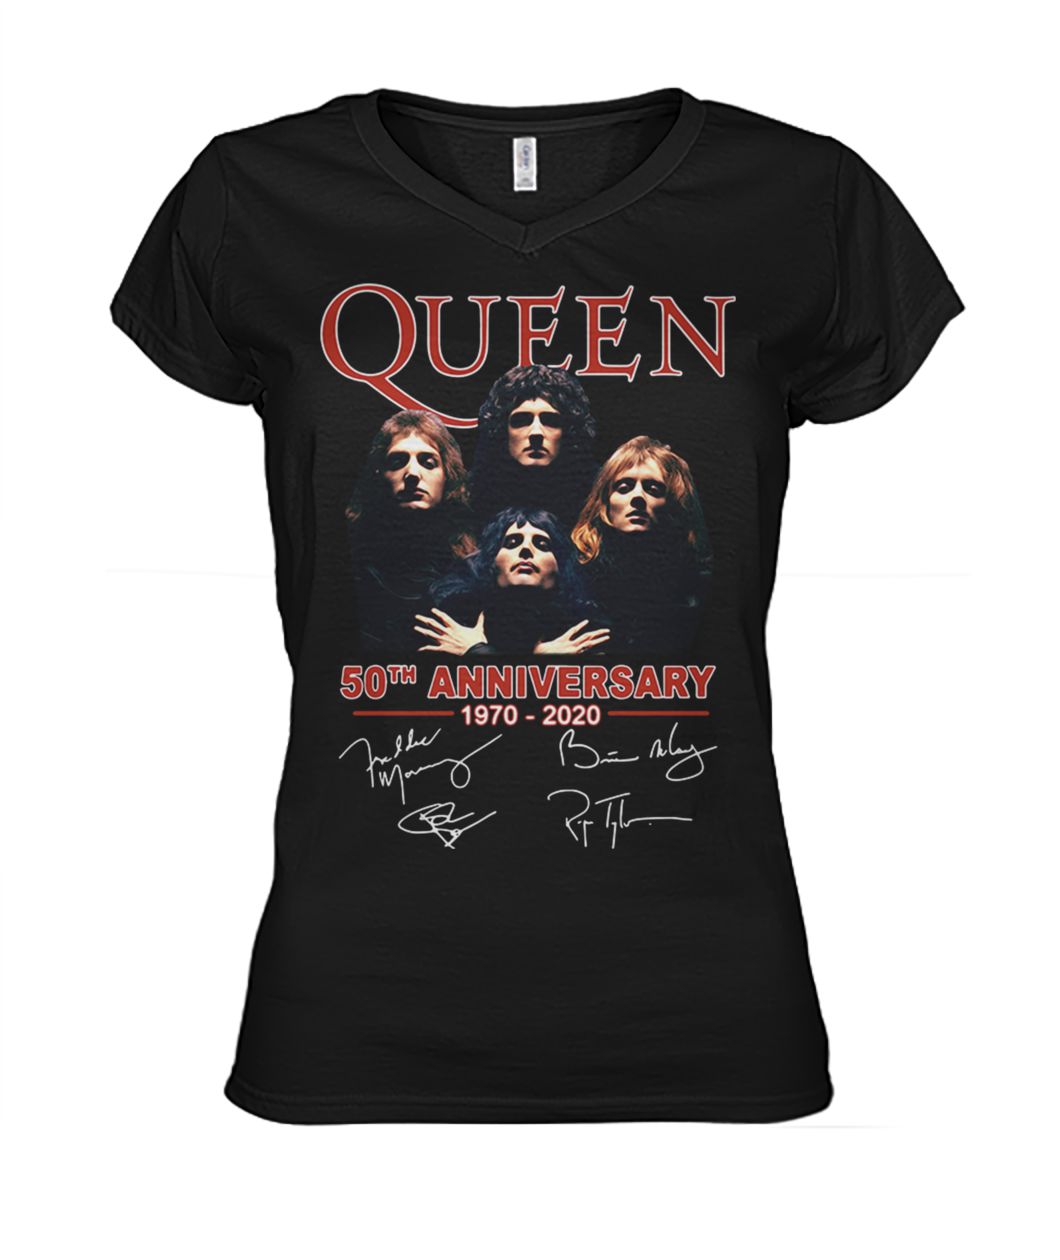 Queen 50th anniversary 1970 2020 signatures women's v-neck